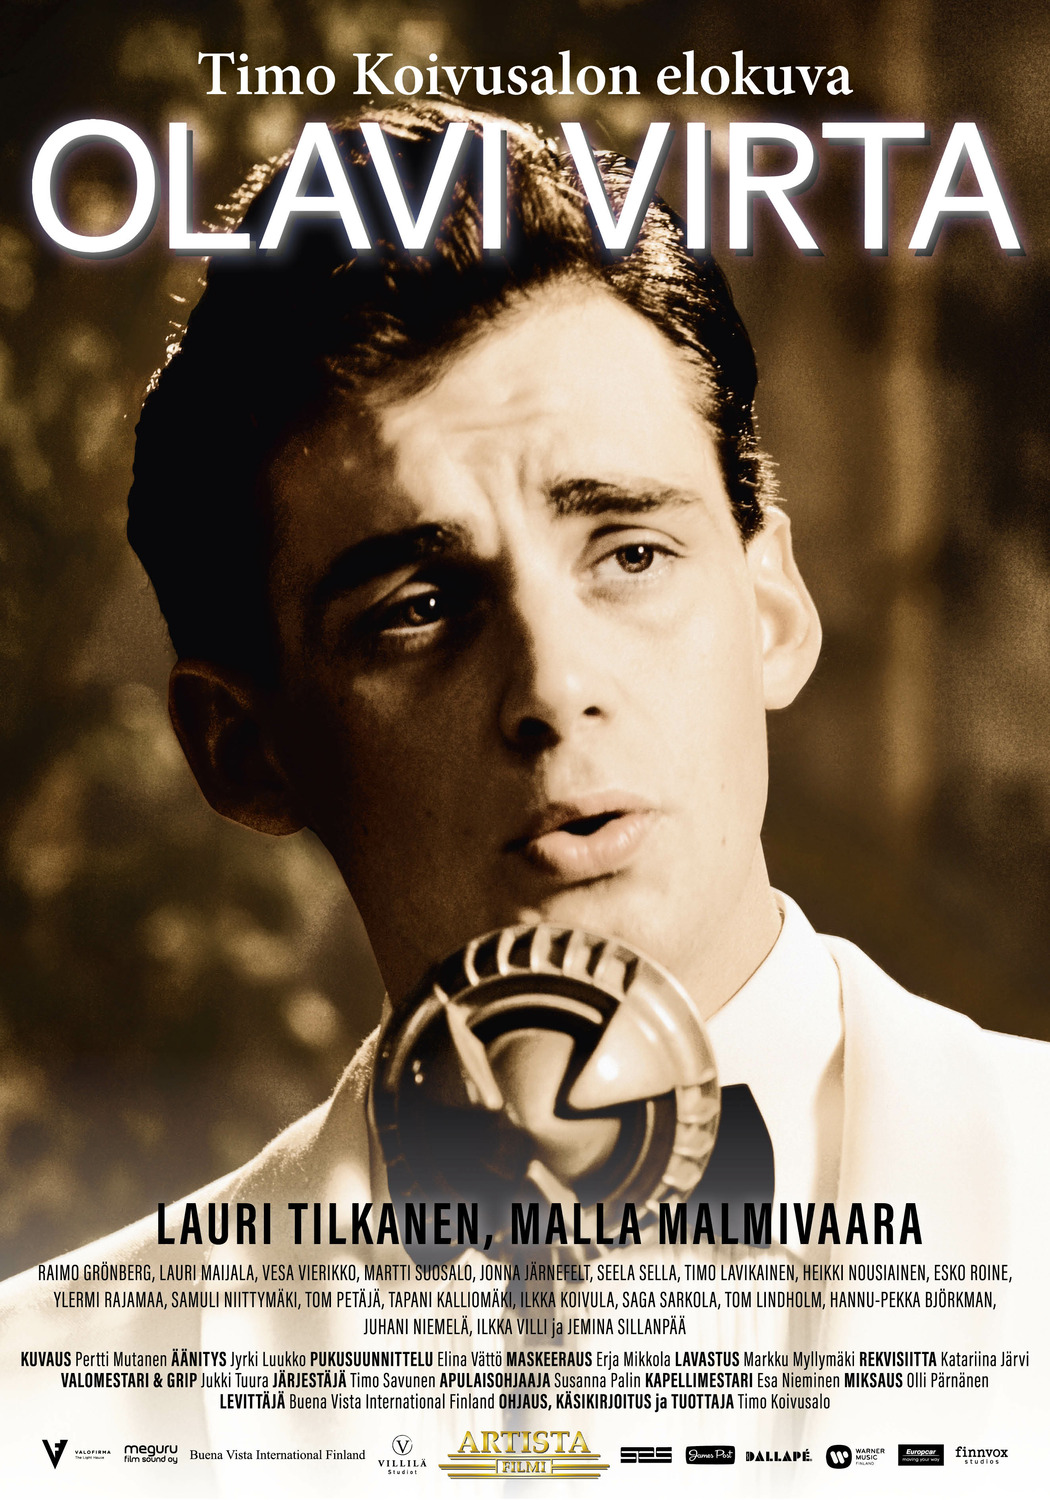 Extra Large Movie Poster Image for Olavi Virta 